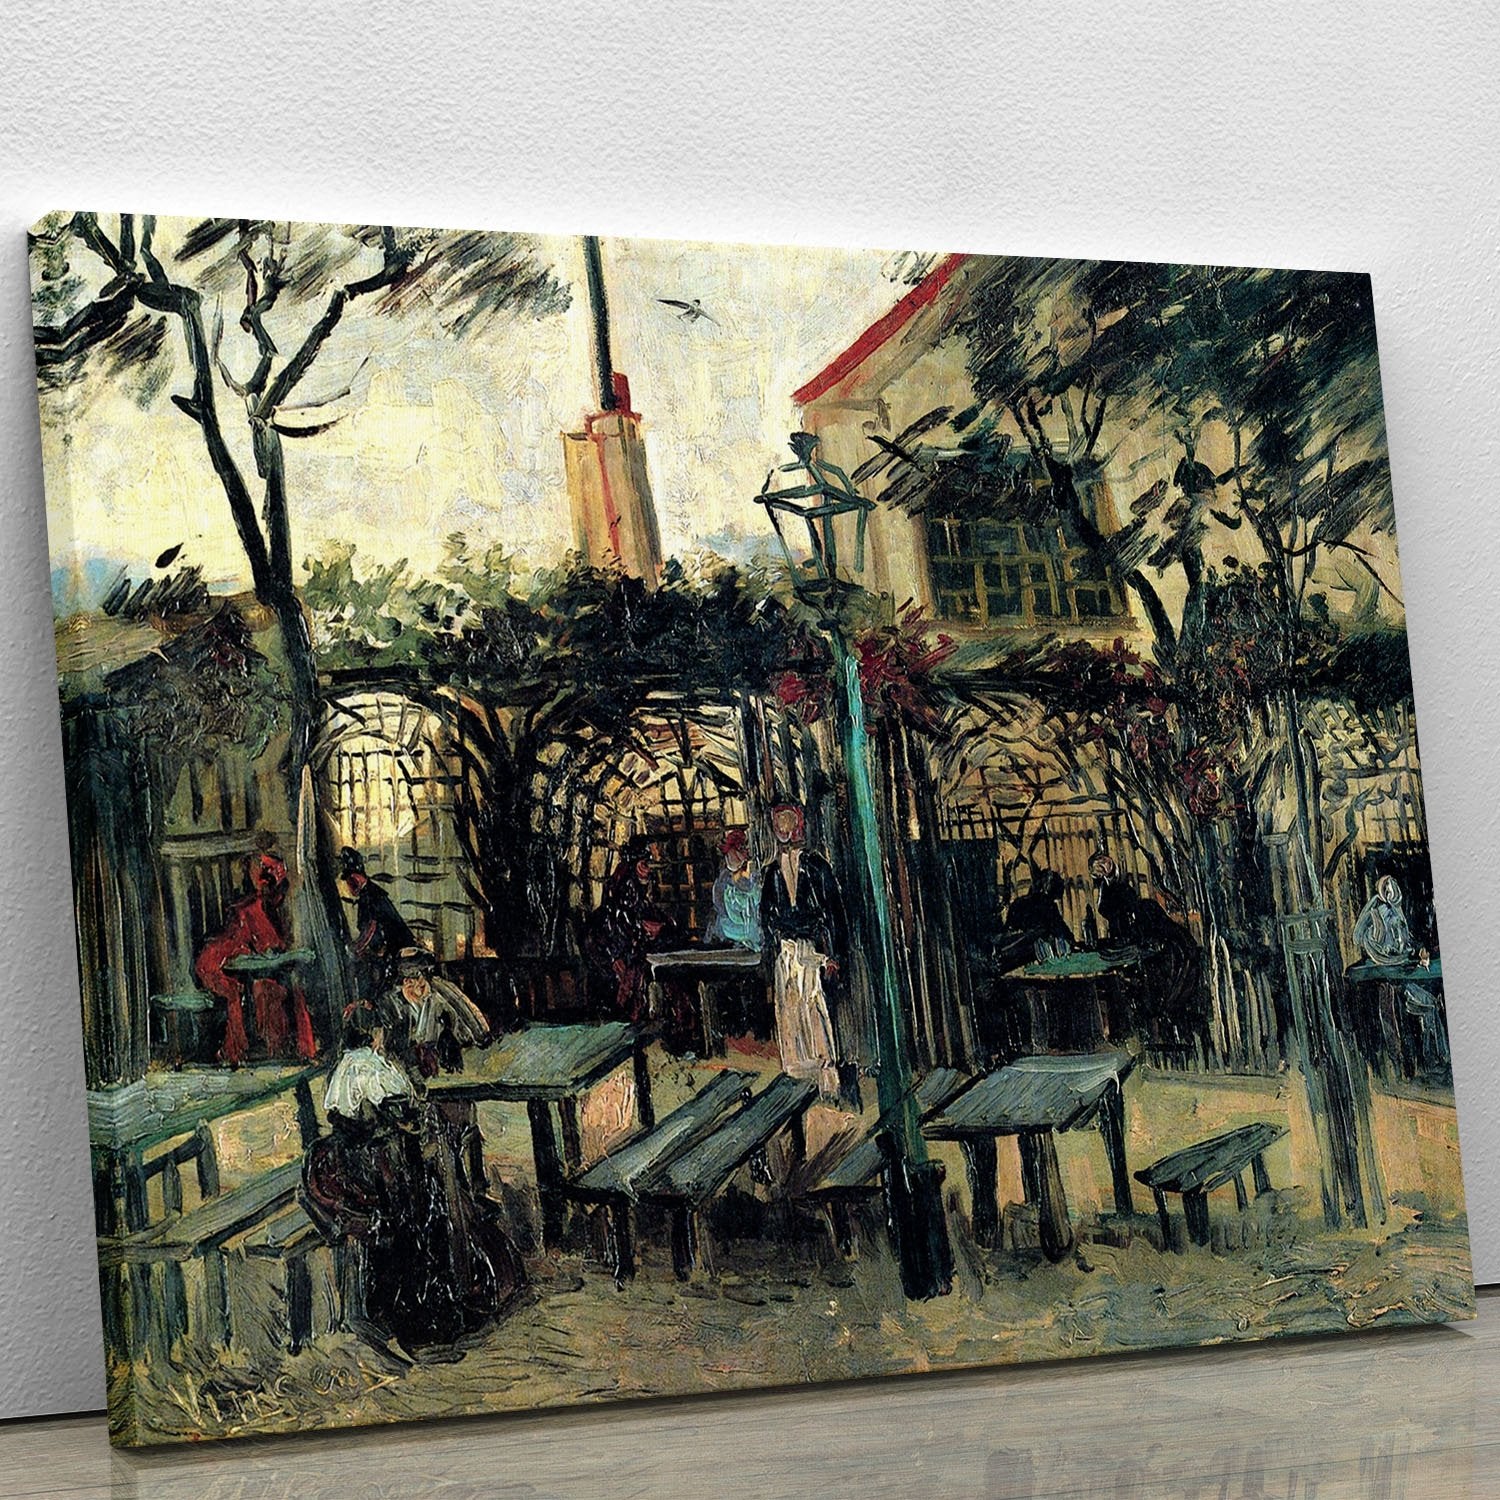 Terrace of a Cafe on Montmartre La Guinguette1 by Van Gogh Canvas Print or Poster